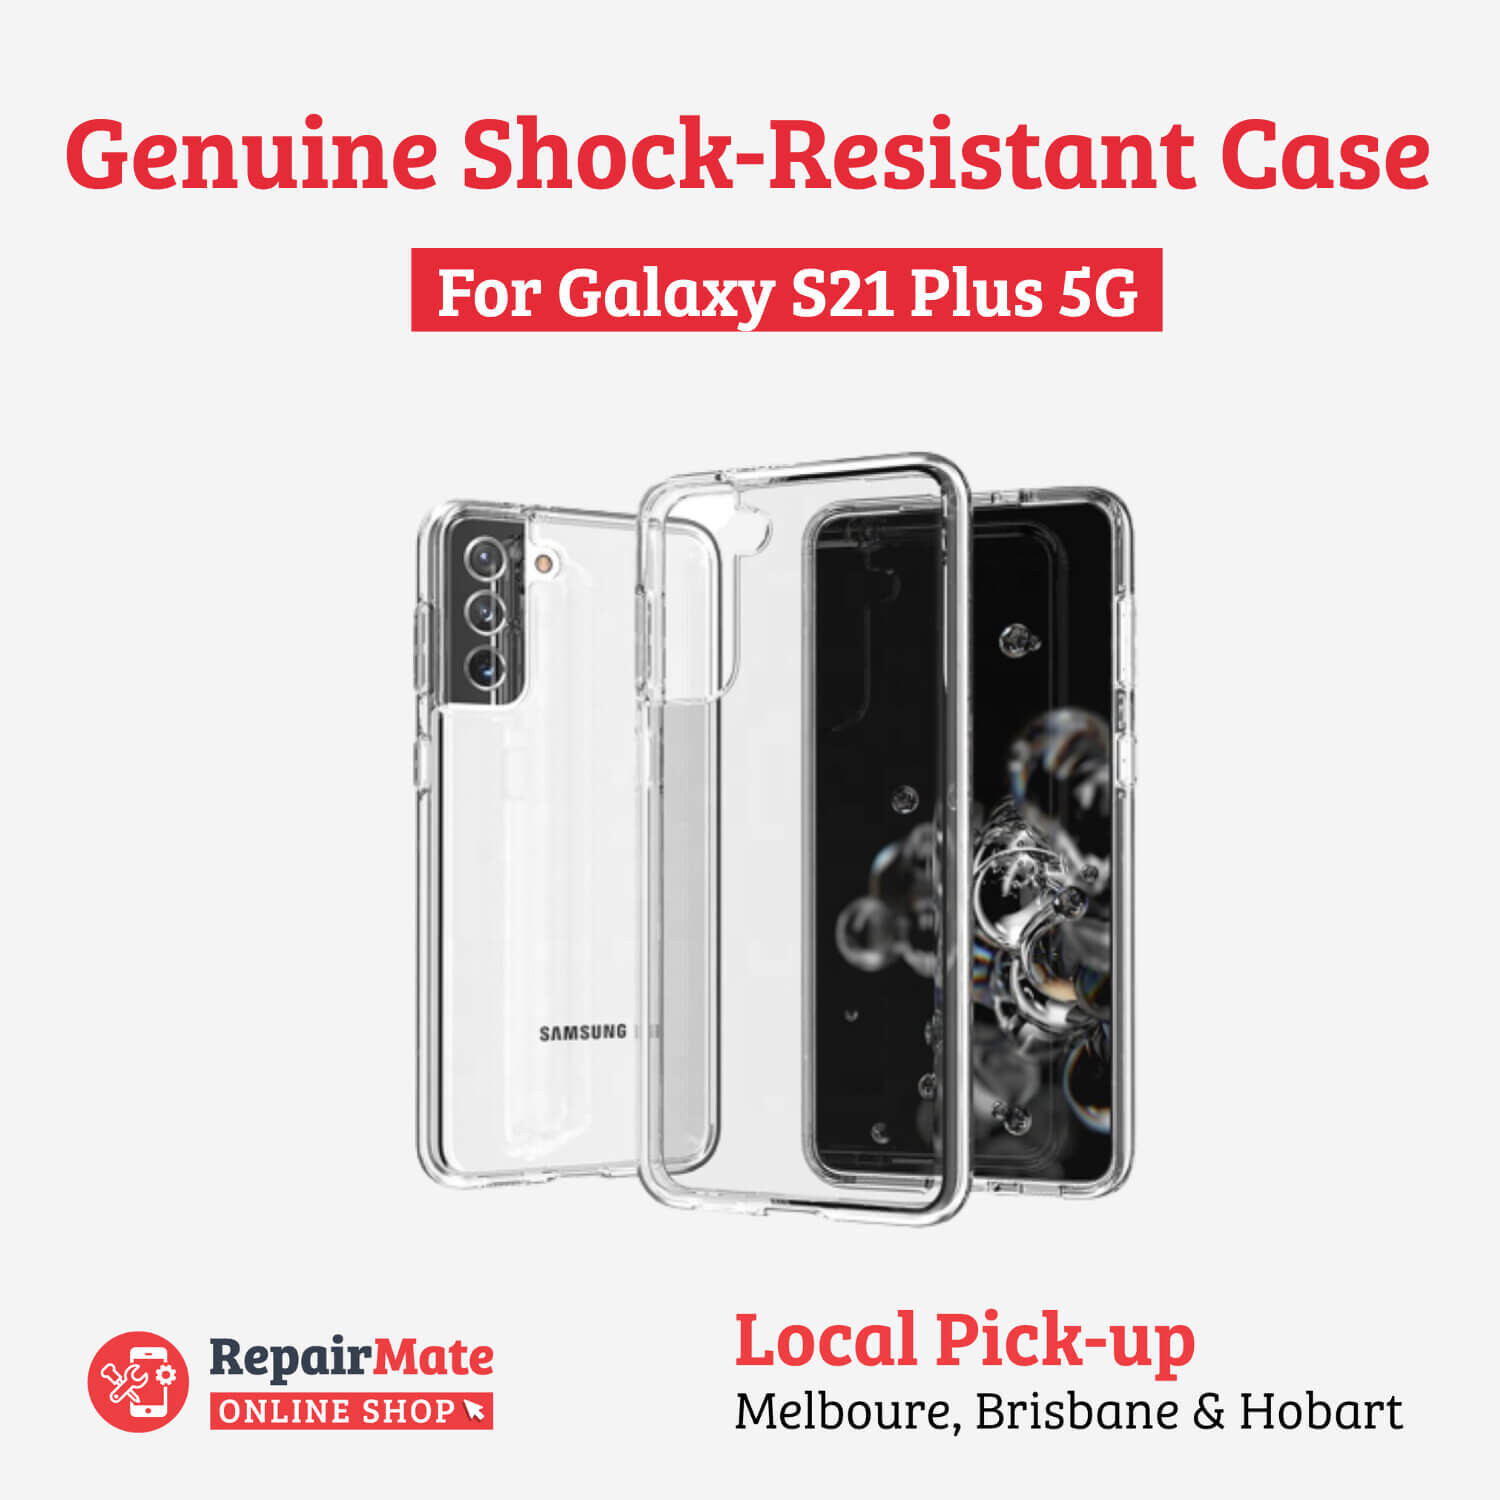 Samsung Galaxy S21 Plus 5G Genuine Shock-Resistant Case